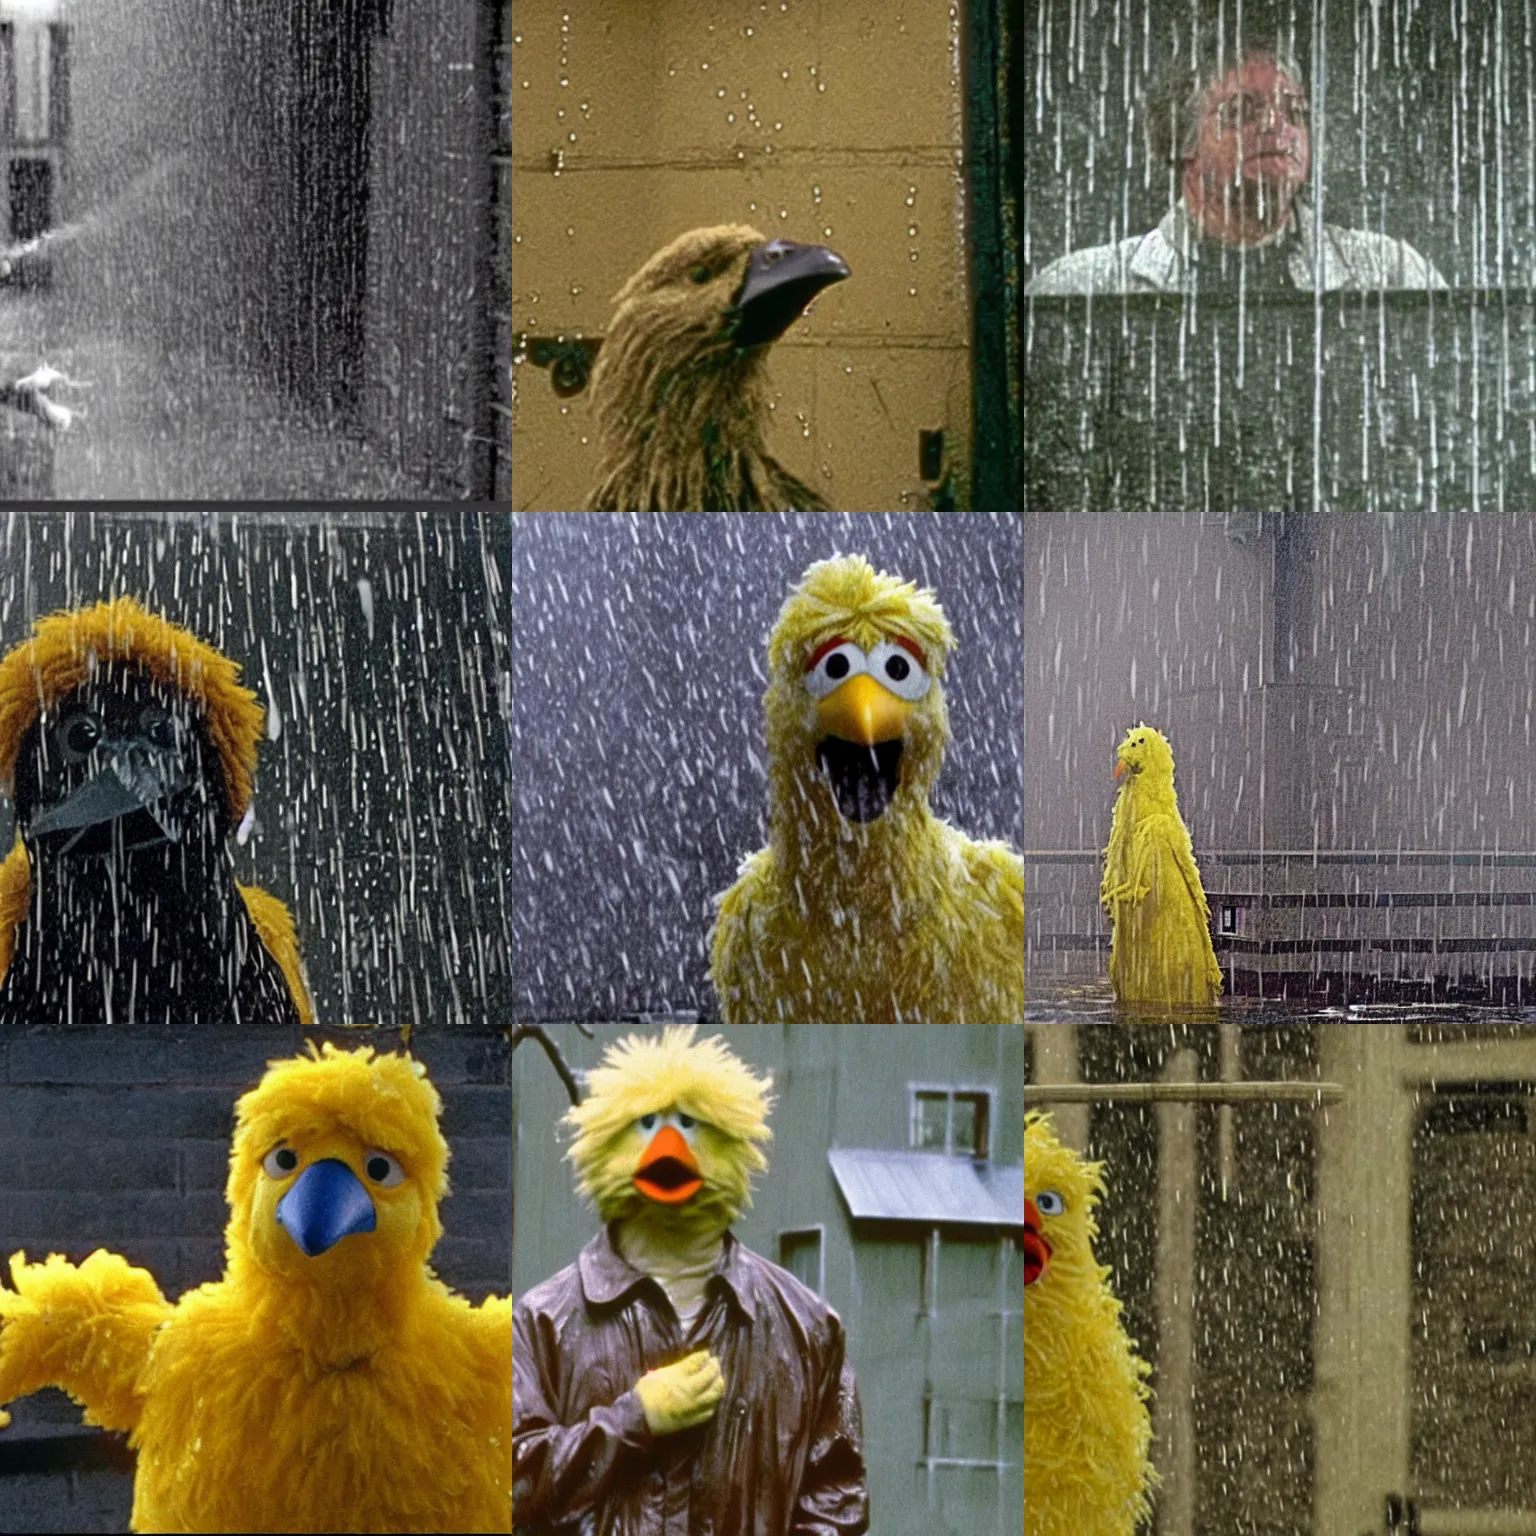 Prompt: a still of big bird in the shawshank redemption, soaking wet in the rain